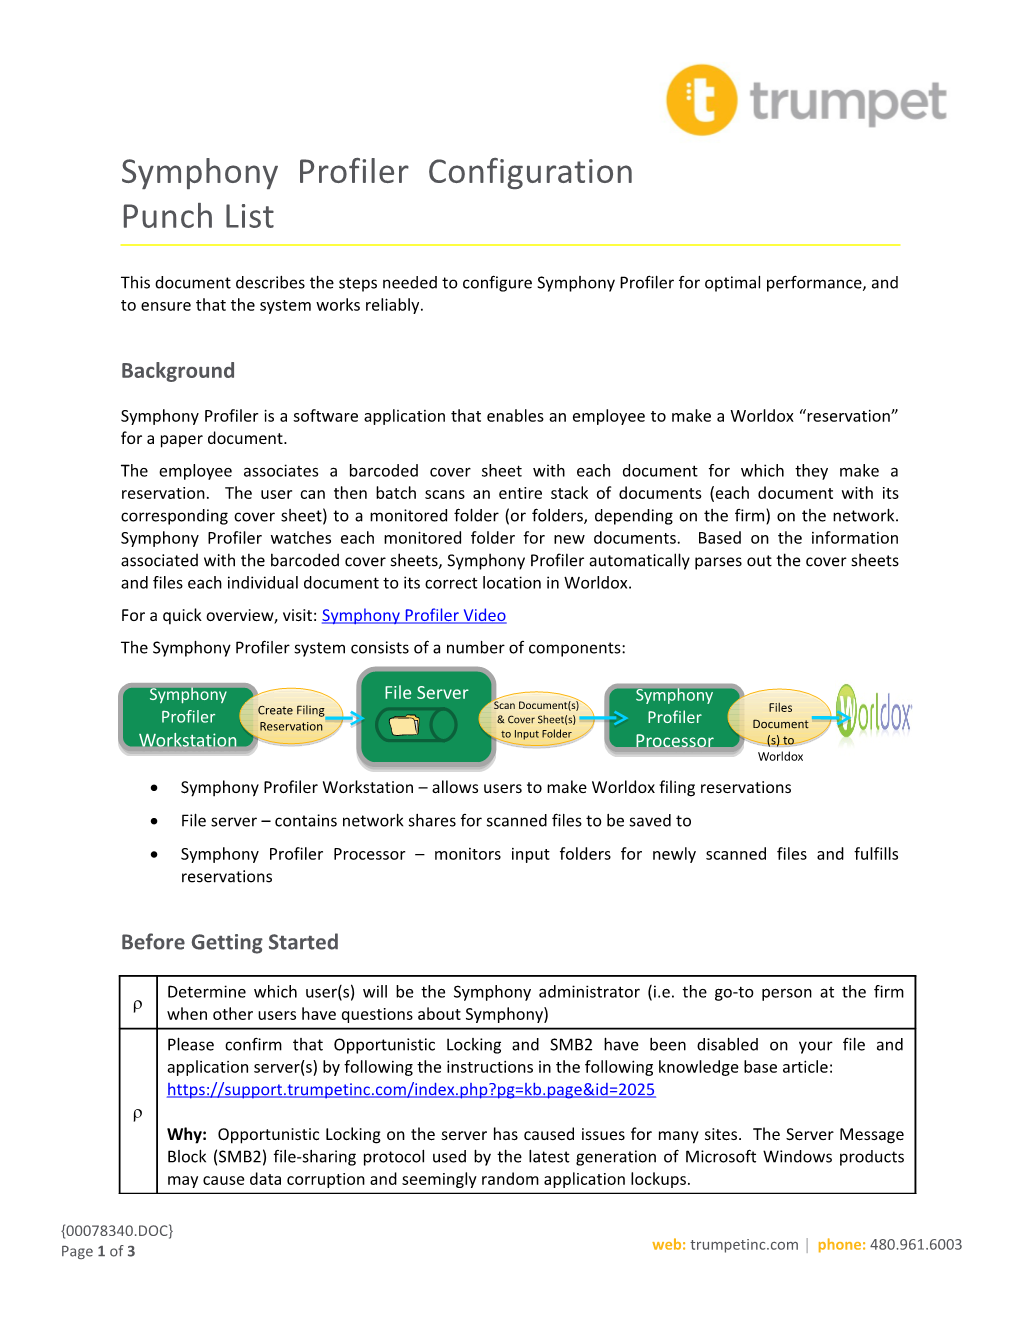 Symphony Profiler Configuration Punch List (00078340;2)